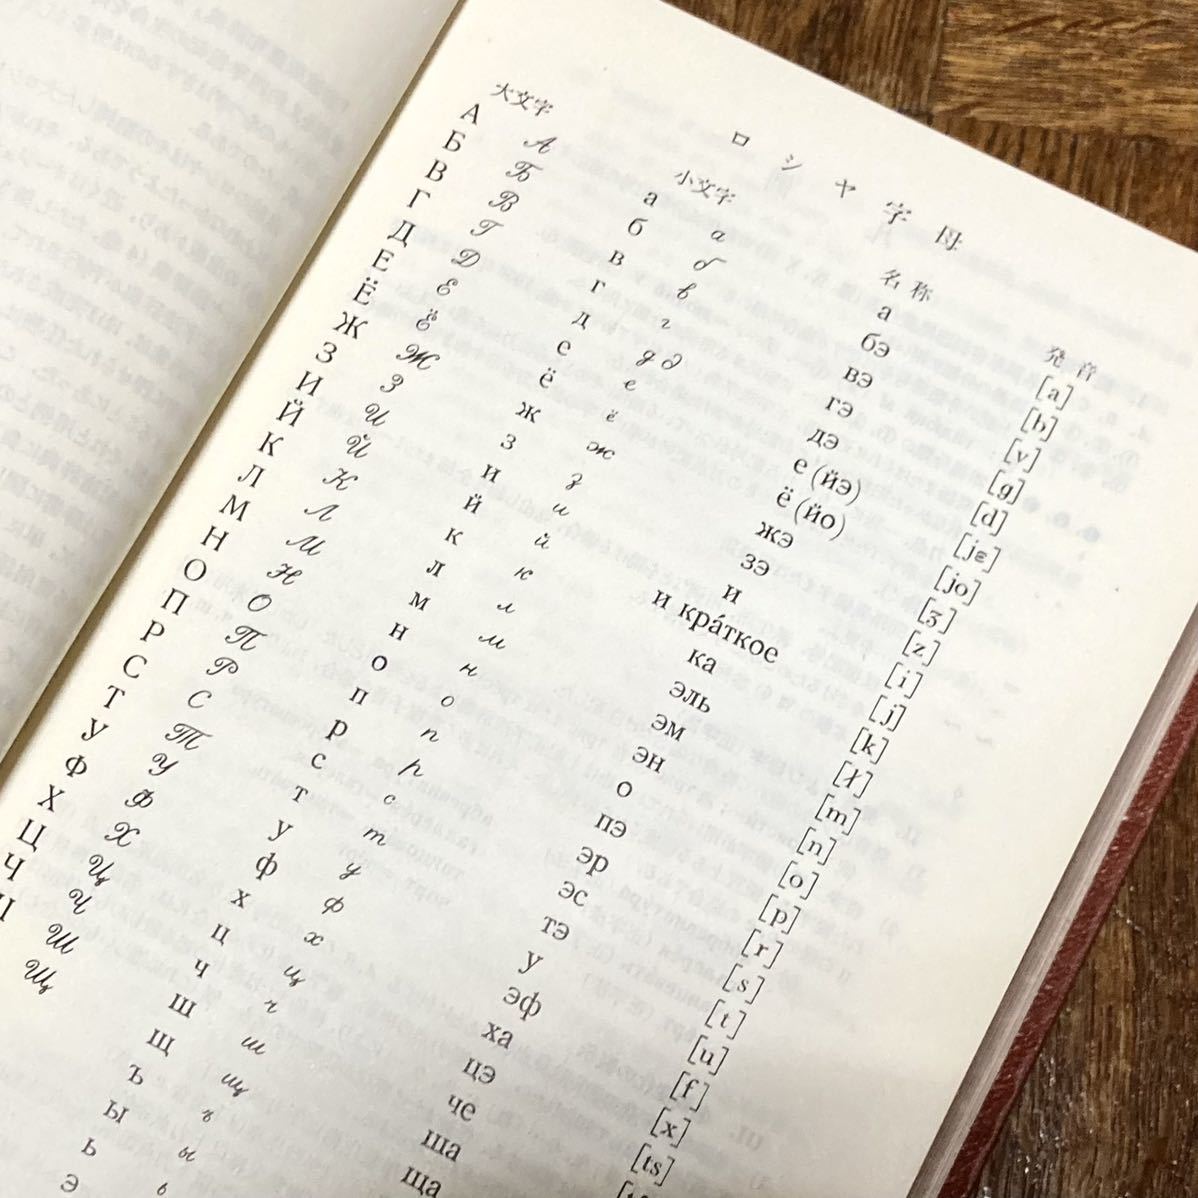  Iwanami rosiya language dictionary *. Japanese cedar . profit * 1960 year * regular price 1500 jpy * secondhand goods * scratch equipped *